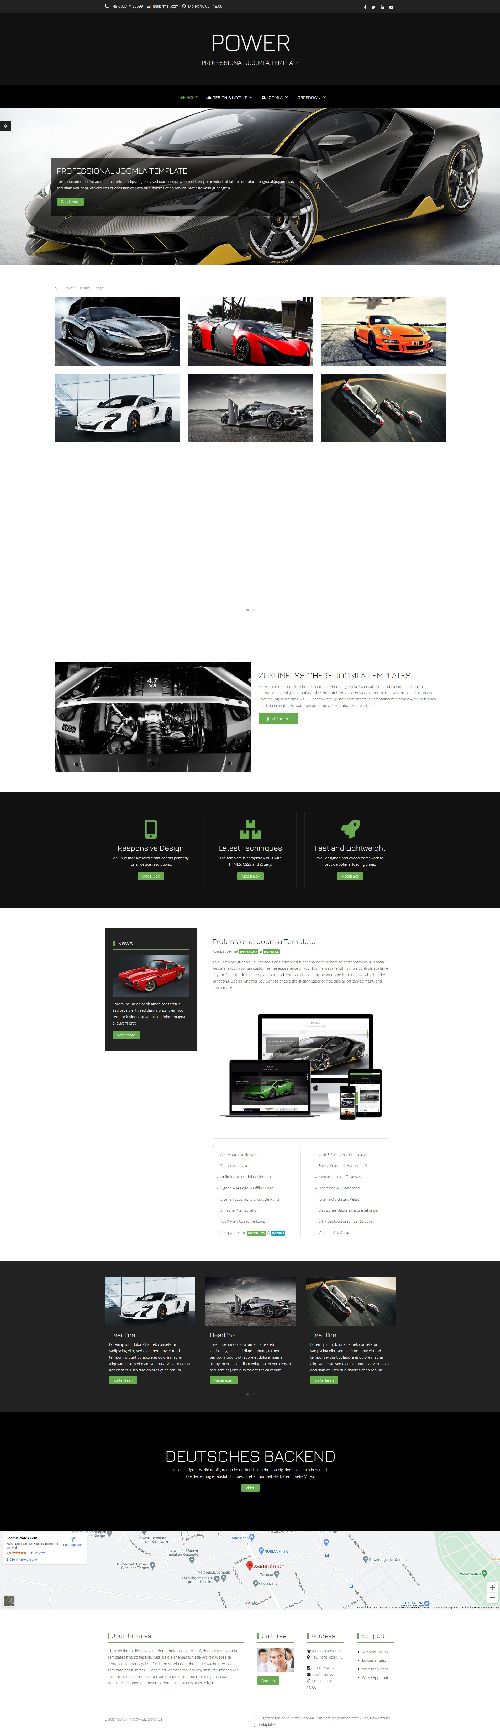 Power - Cars Sellers, Detailling Websites Joomla Template